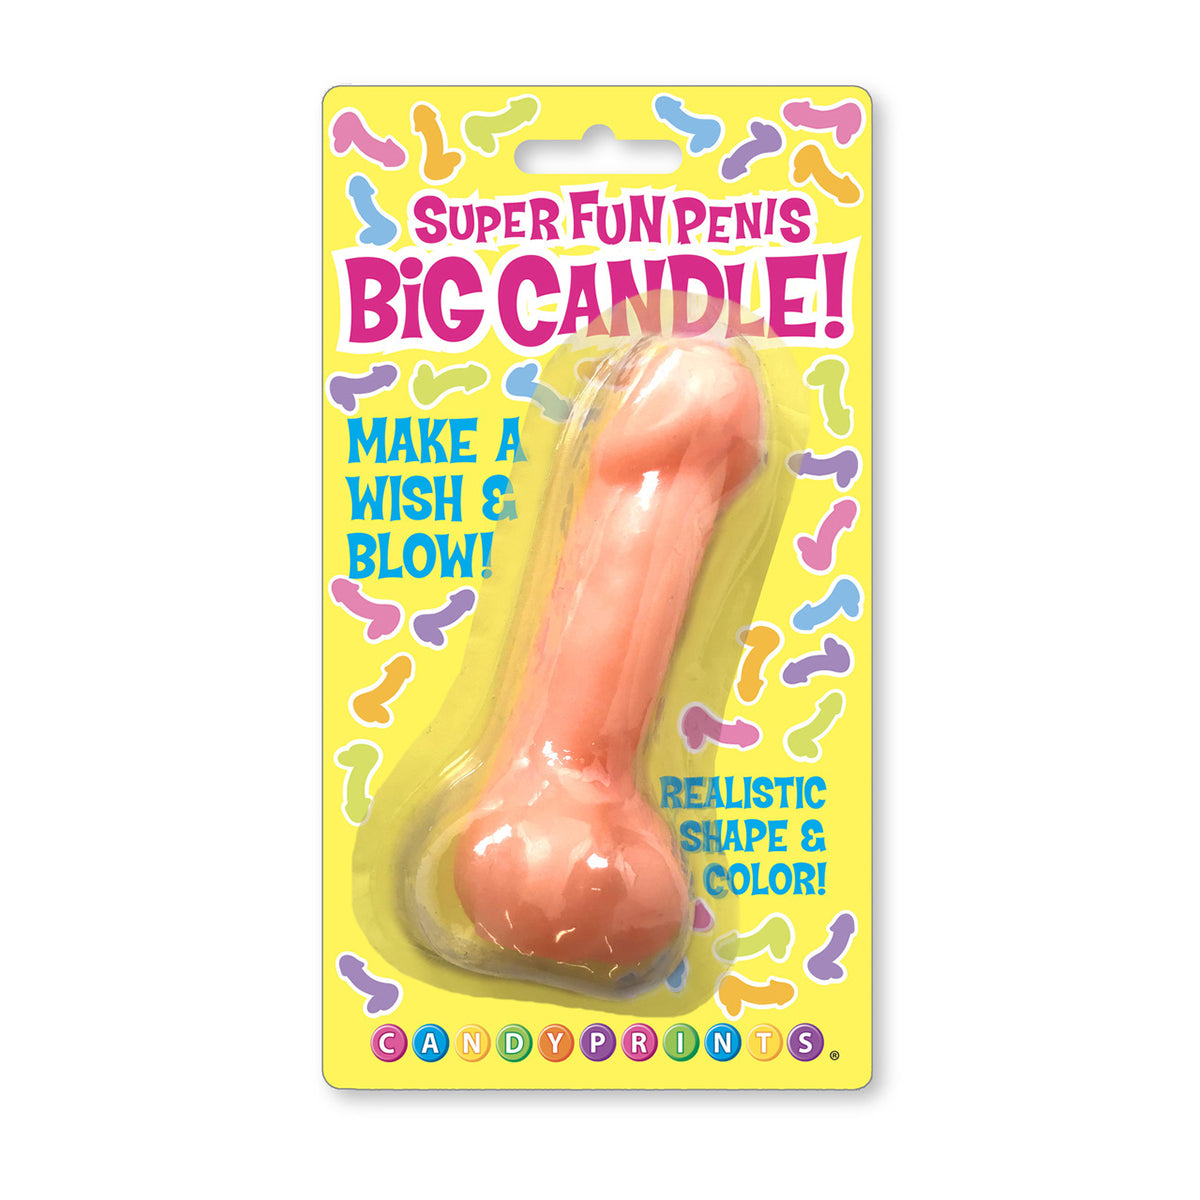 Candyprints Super Fun Penis Big Candle Pinkish